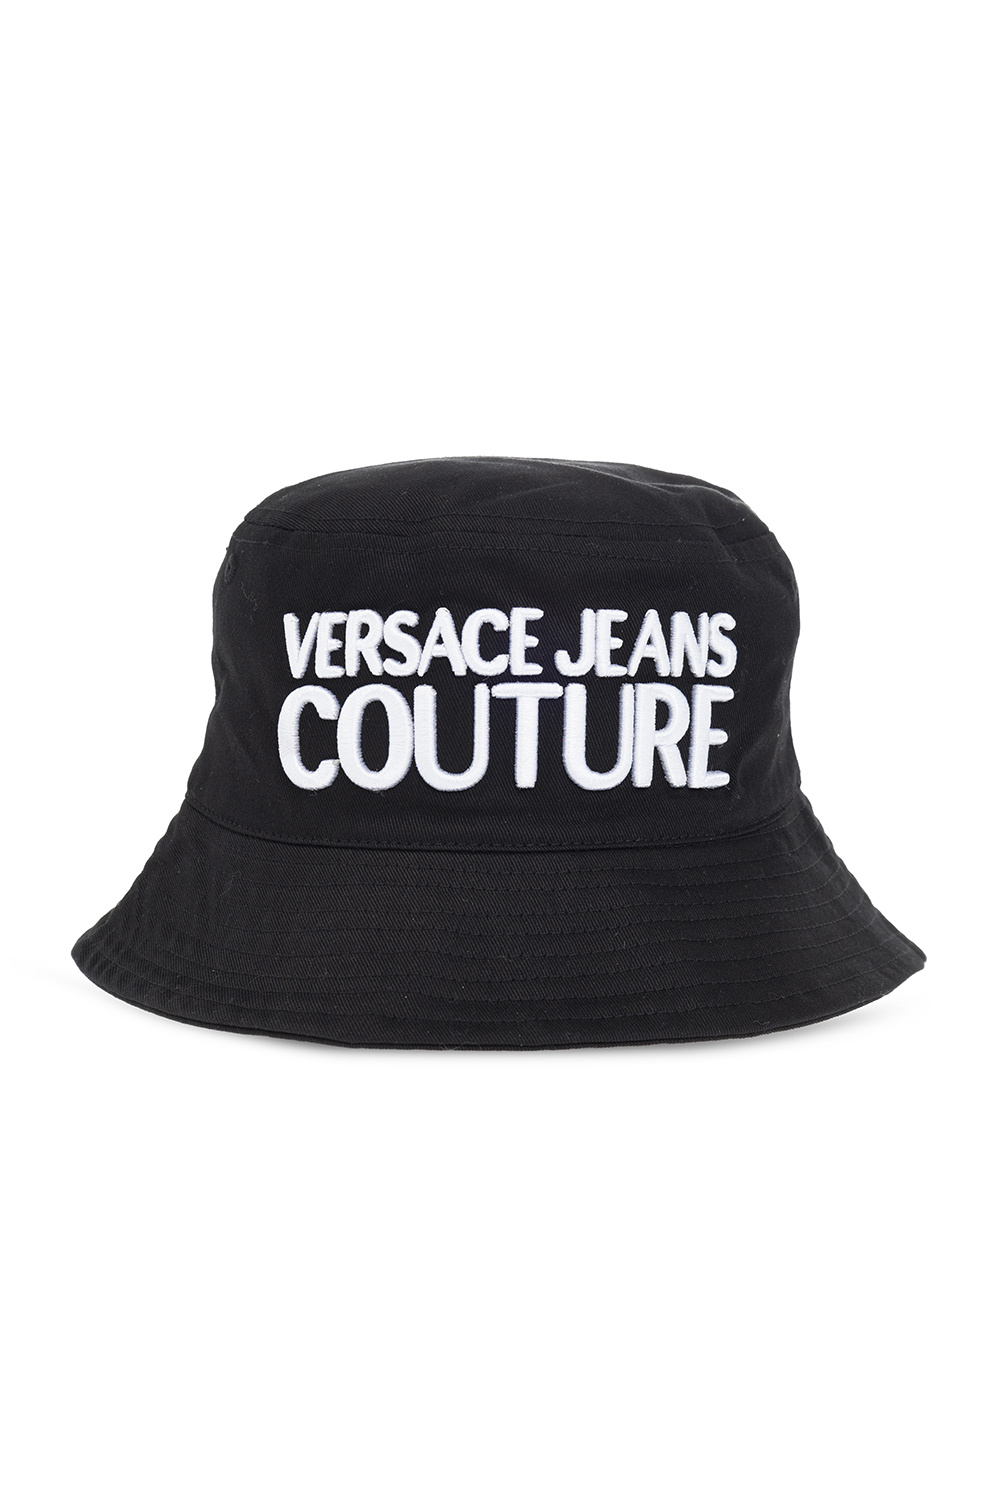 Versace Jeans Couture Casquette adidas Daily Cap DM6178 Black White